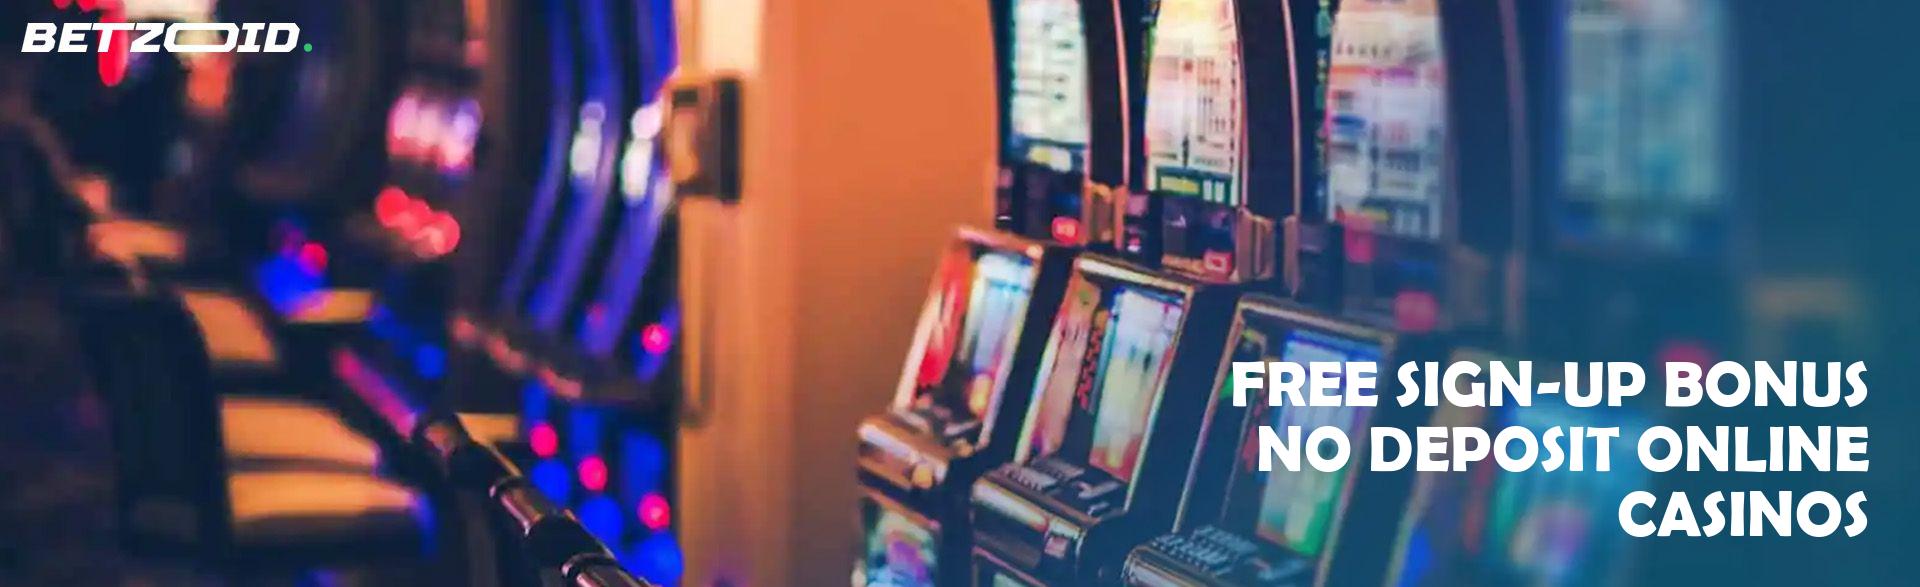 Free Sign-Up Bonus No Deposit Online Casinos.